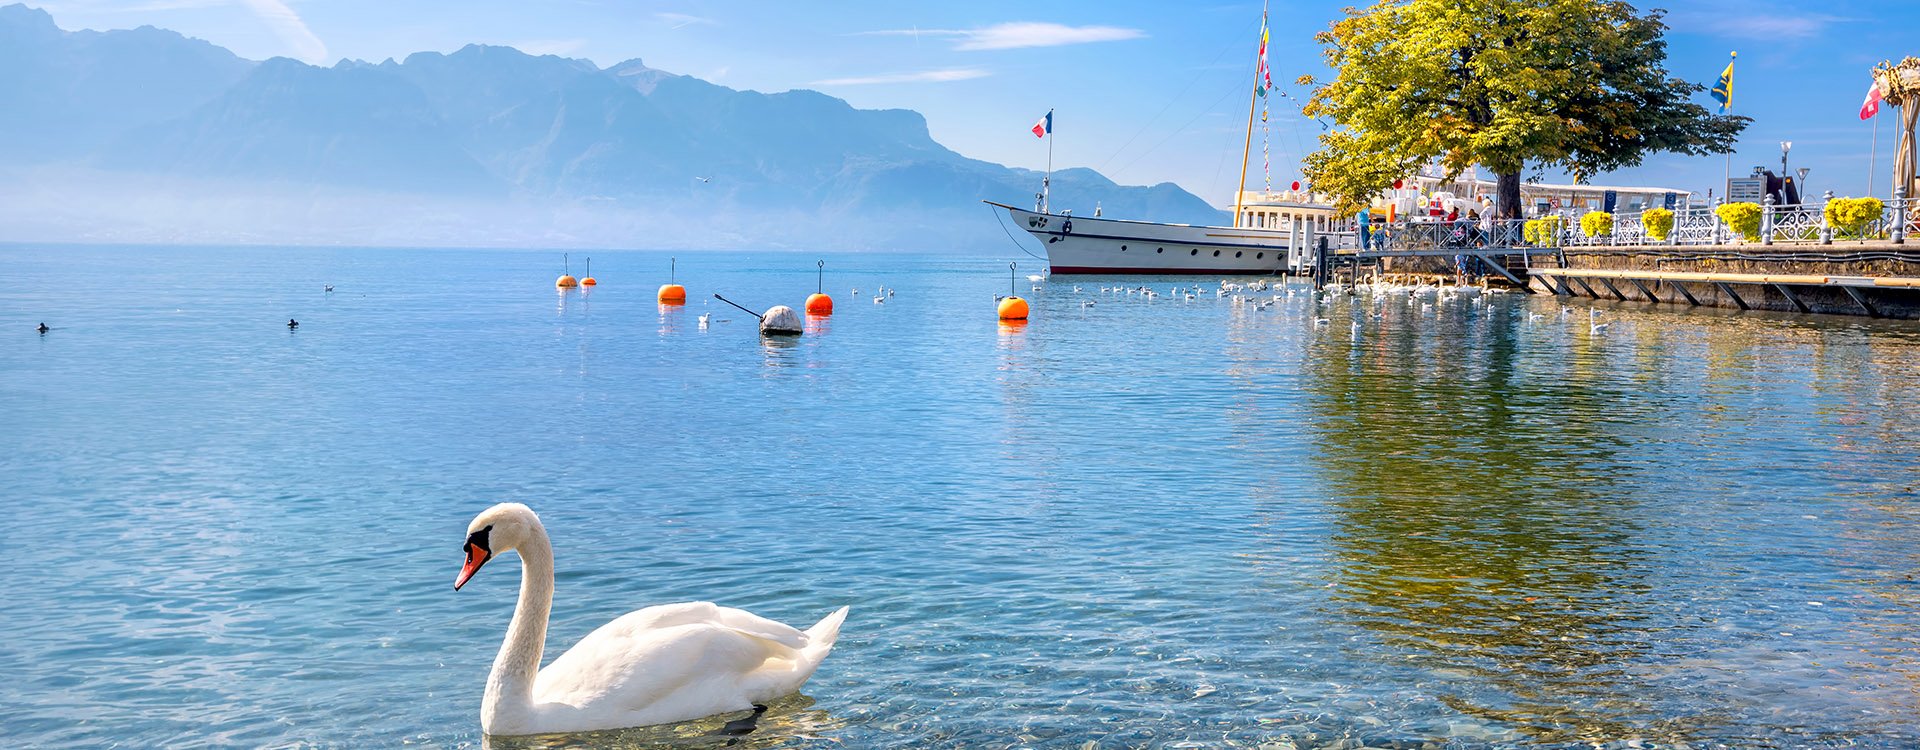 Quay with old ferry on Lake Geneva in Vevey. Vaud canton, Switzerland